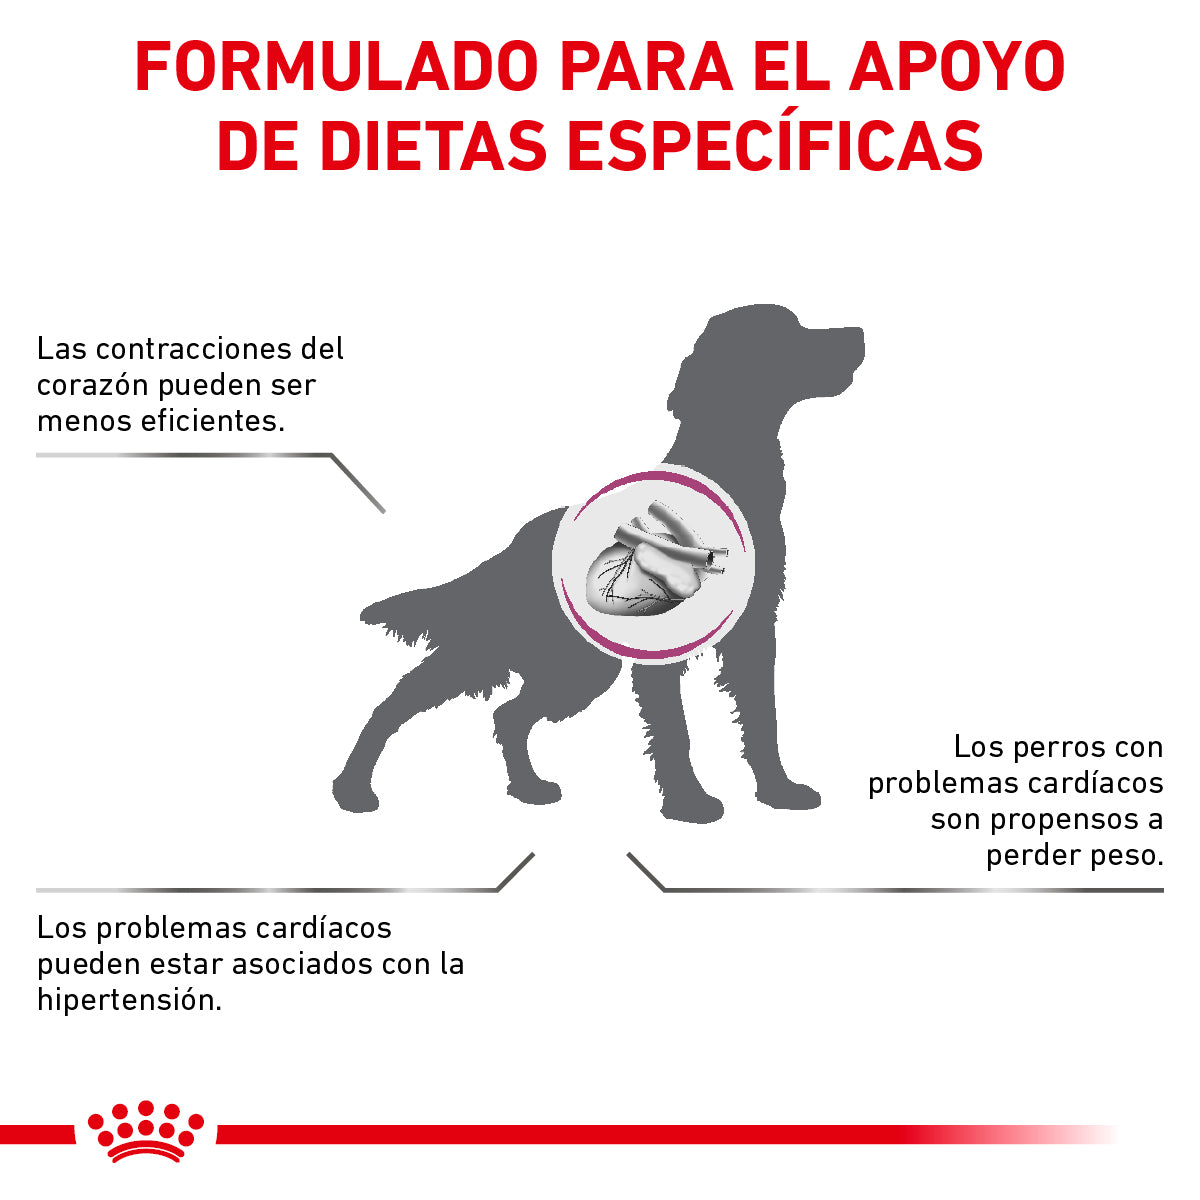 Alimento para Perro Adulto Enfermedad Cardiaca Royal Canin VET Early Cardiac